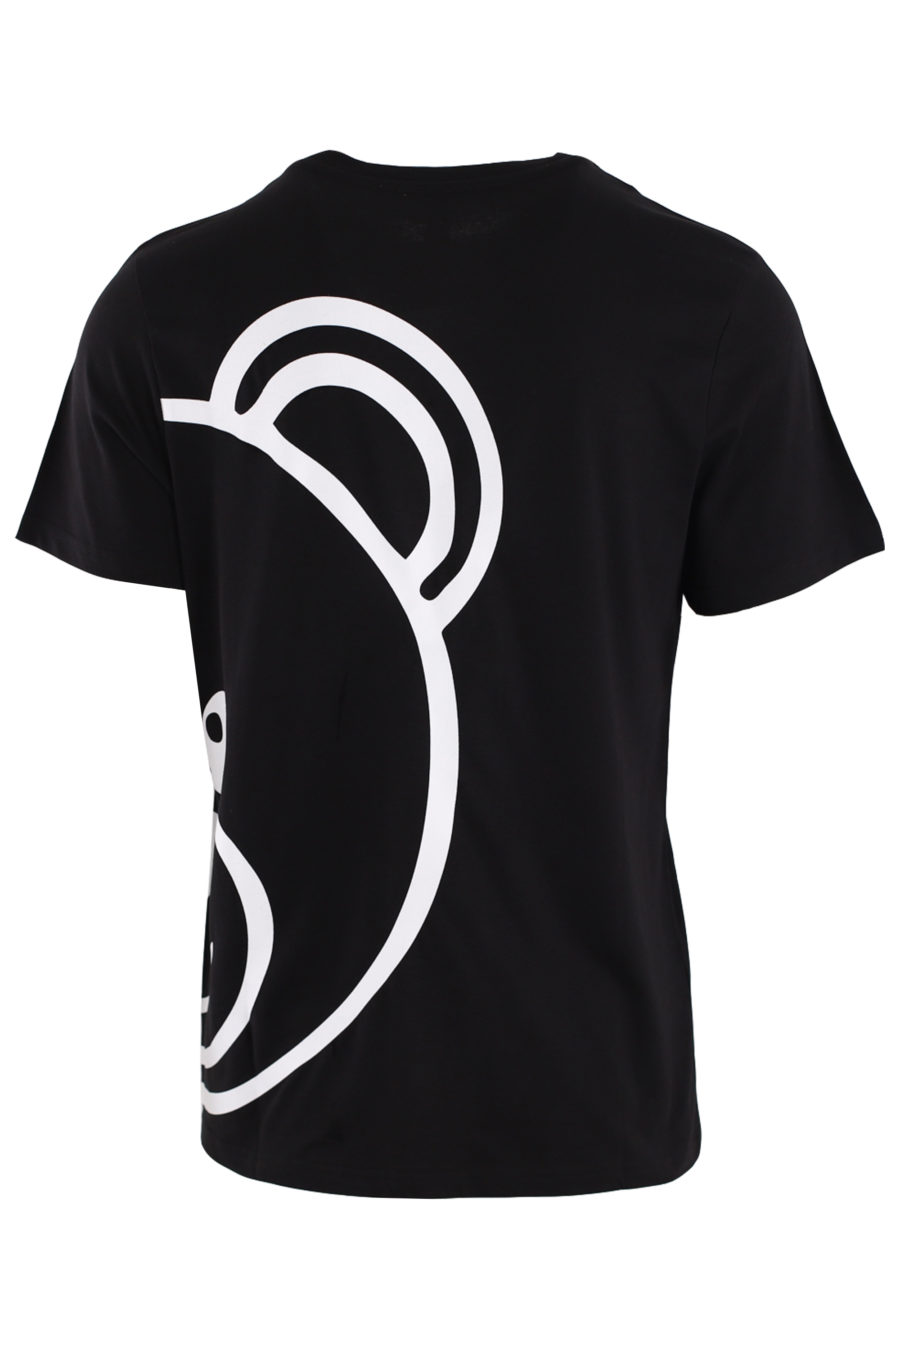 Camiseta negra con oso grande lateral y reverso - IMG 8825